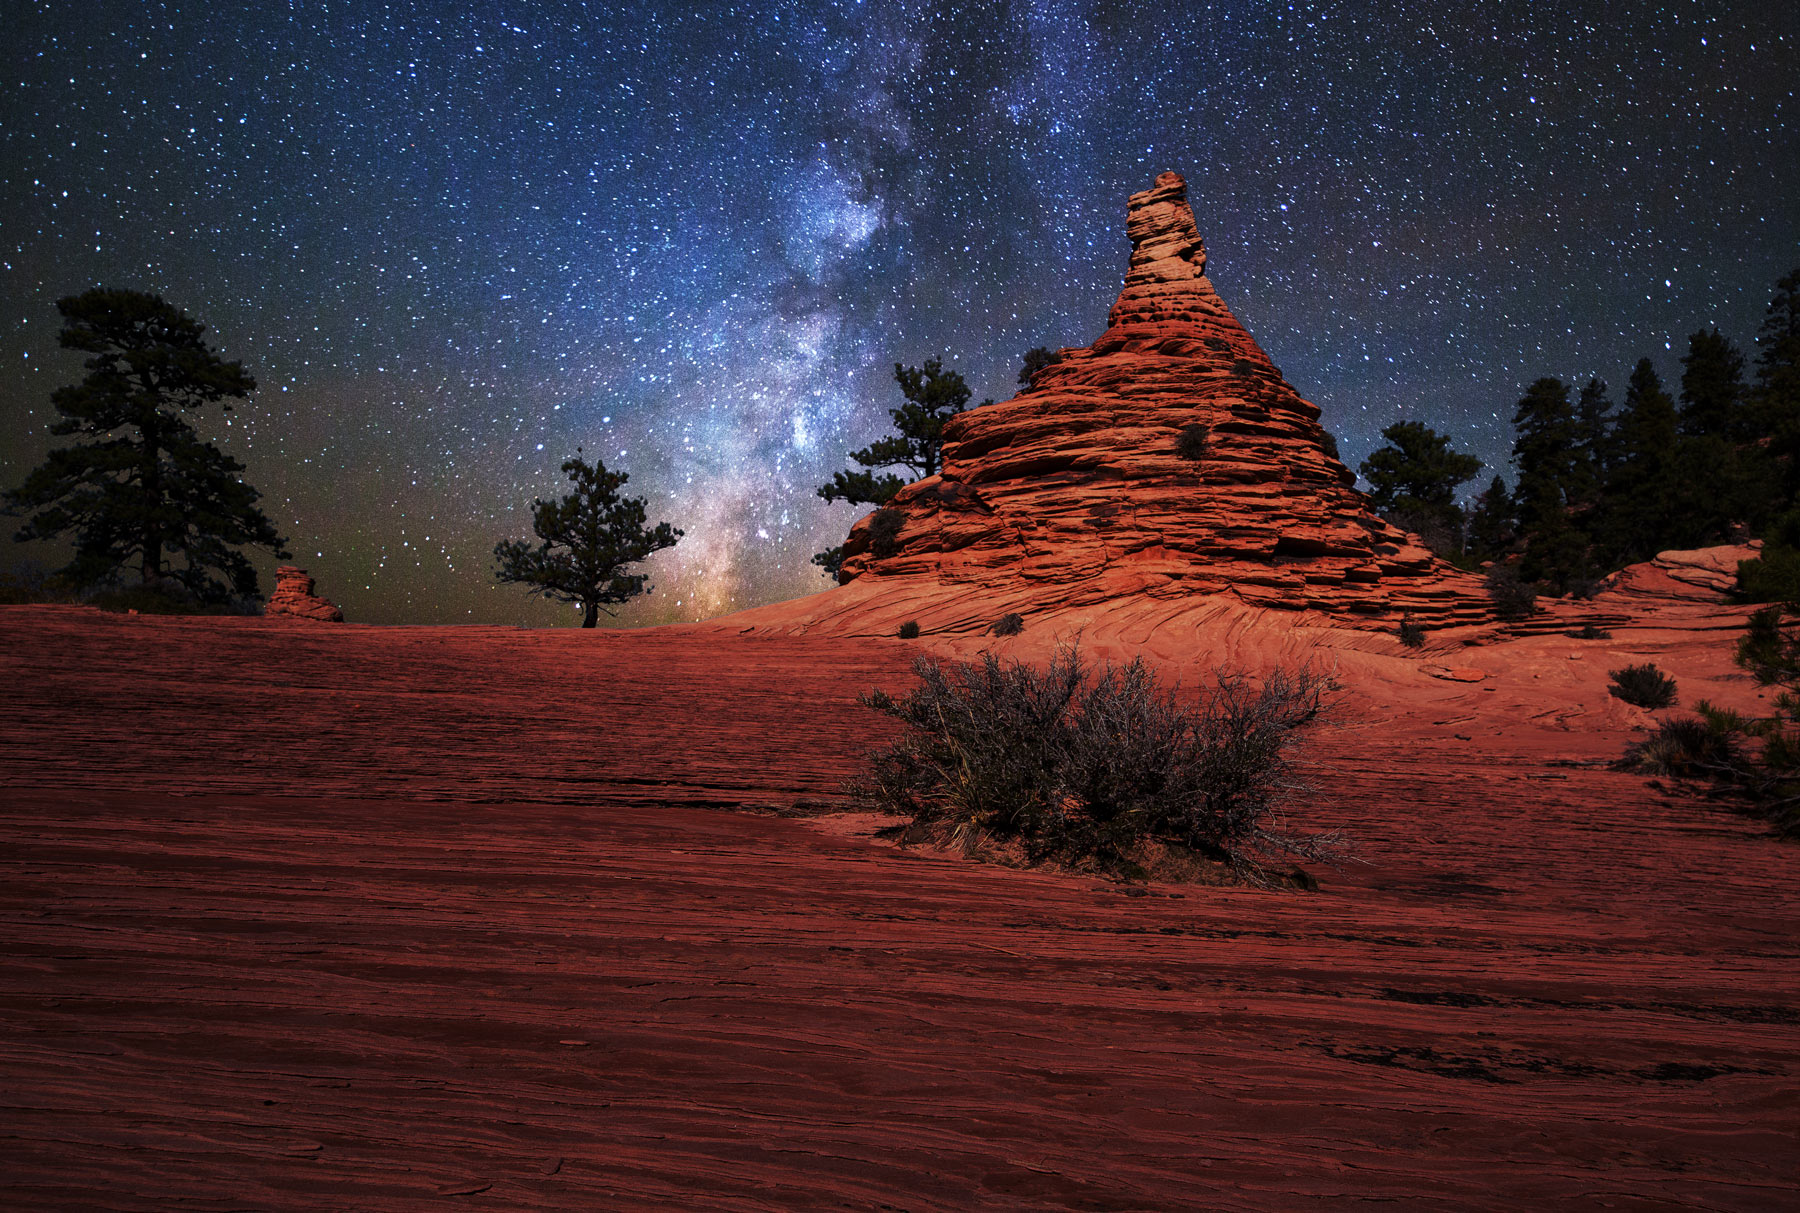 Capturing the night sky at Zion | National Parks Near Salt Lake City